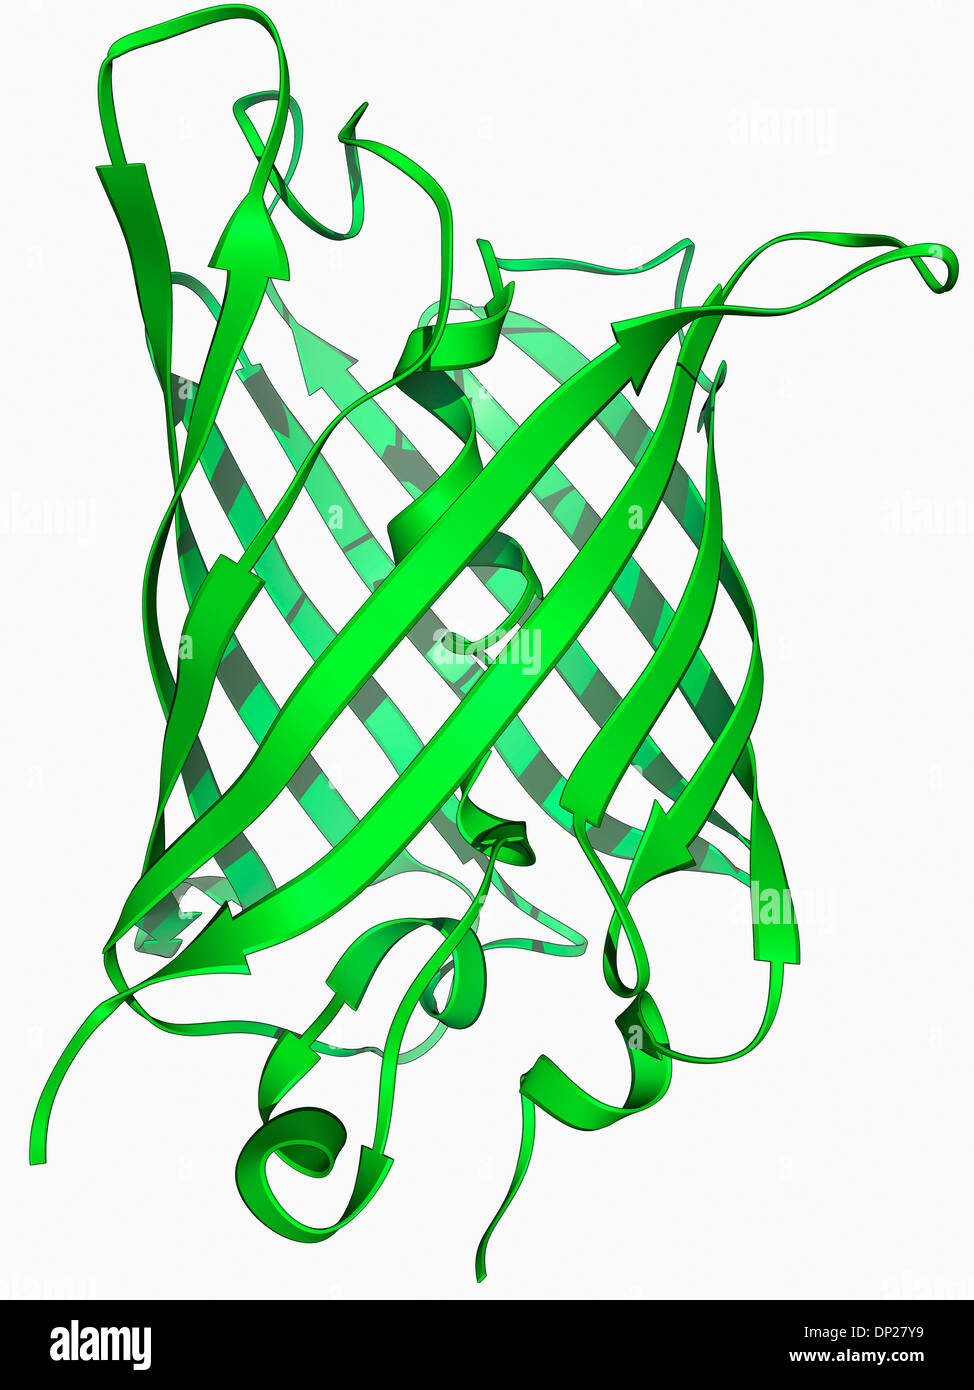 Green fluorescent protein molecule Stock Photo